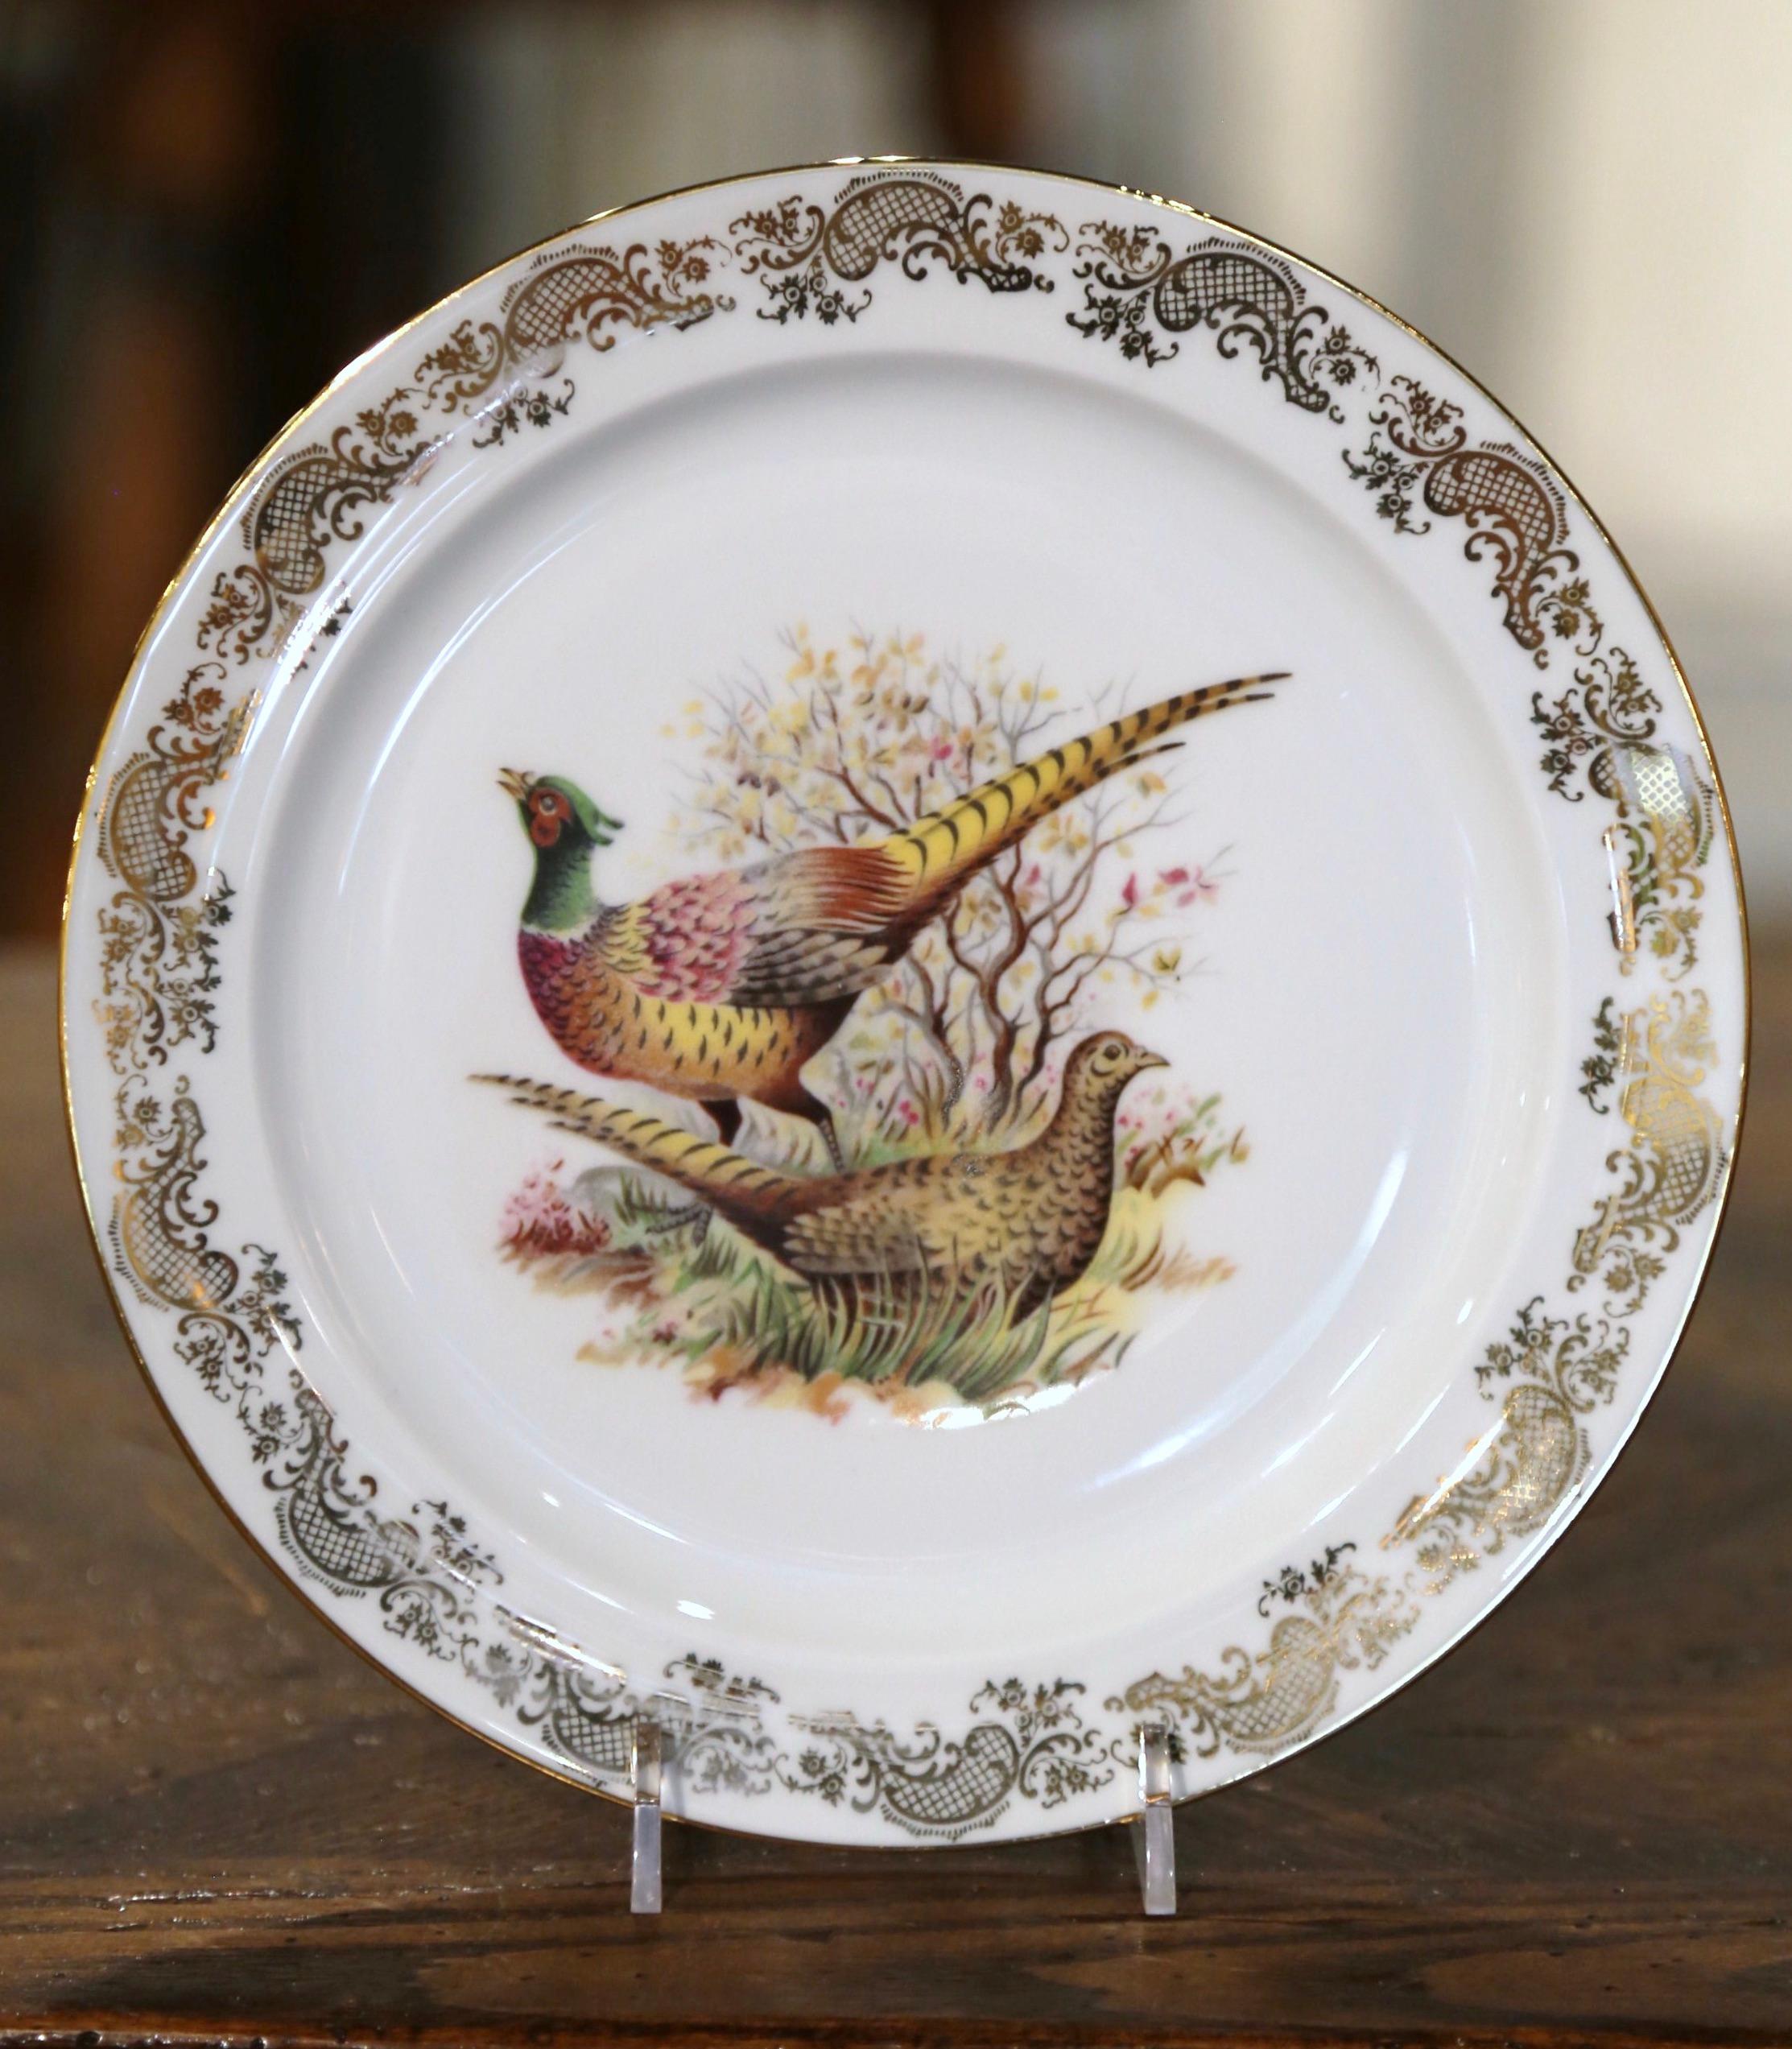  French Limoges Porcelain Service with Bird Motifs Signed Benoit - Set of 13 2